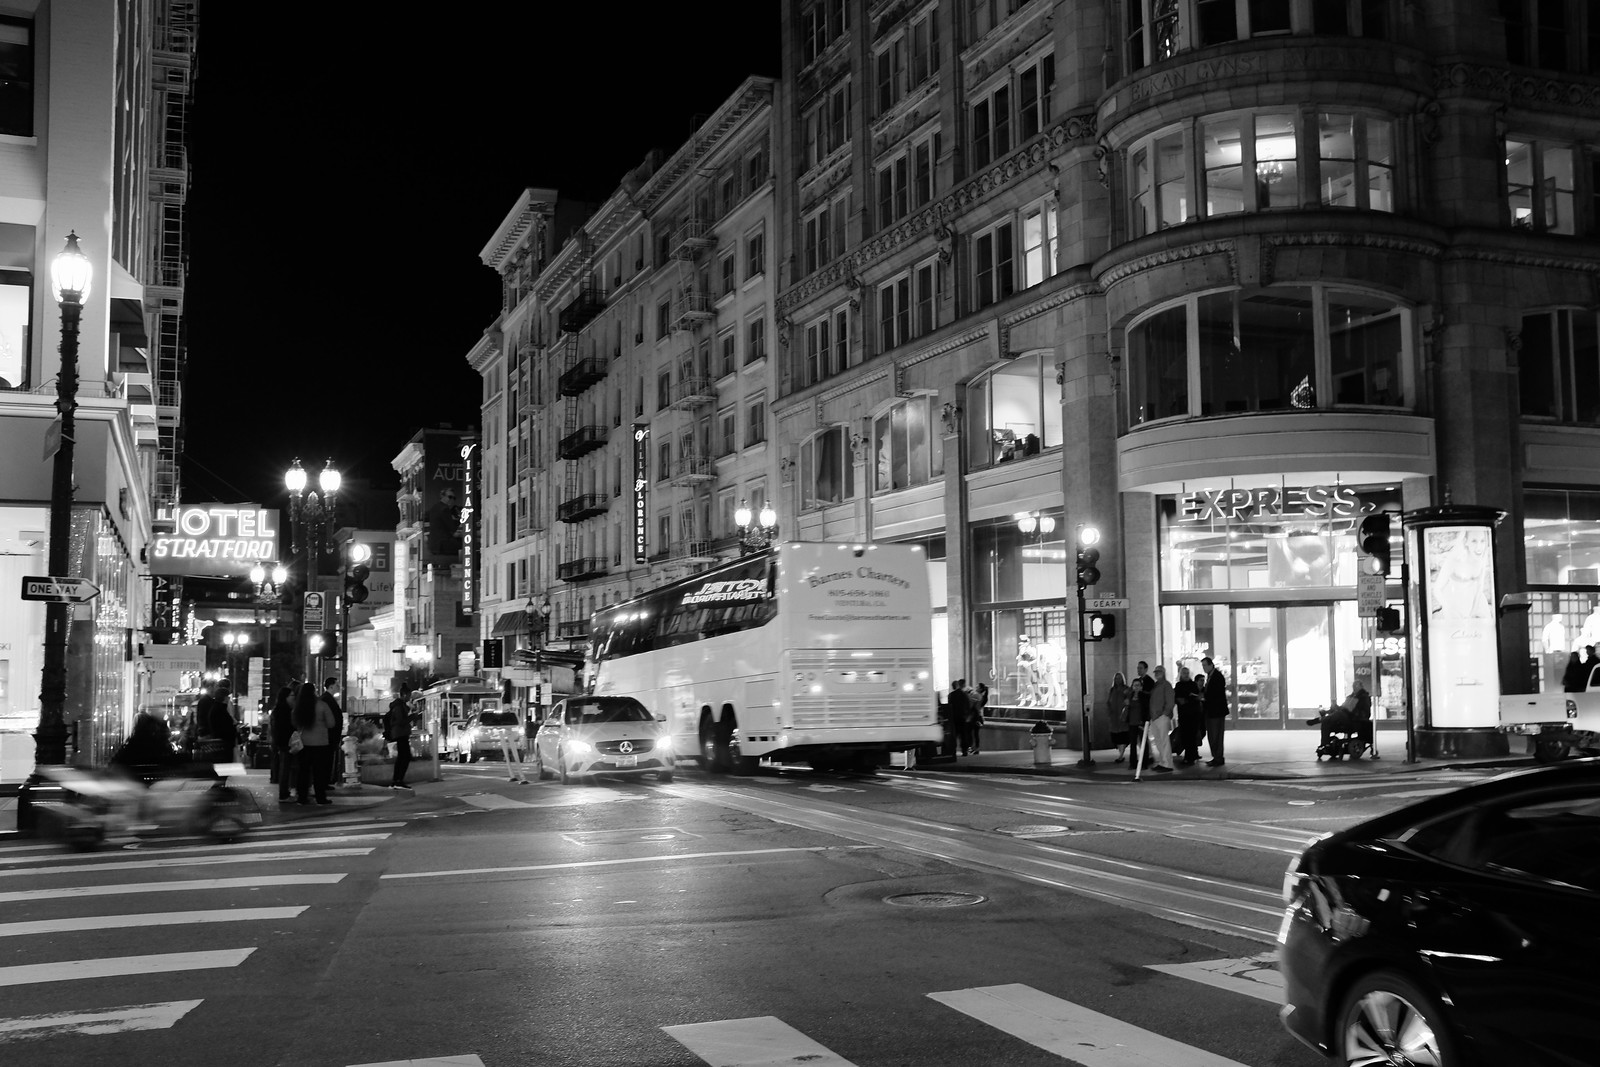 The San Francisco night photo taken by FUJIFILM X100S.